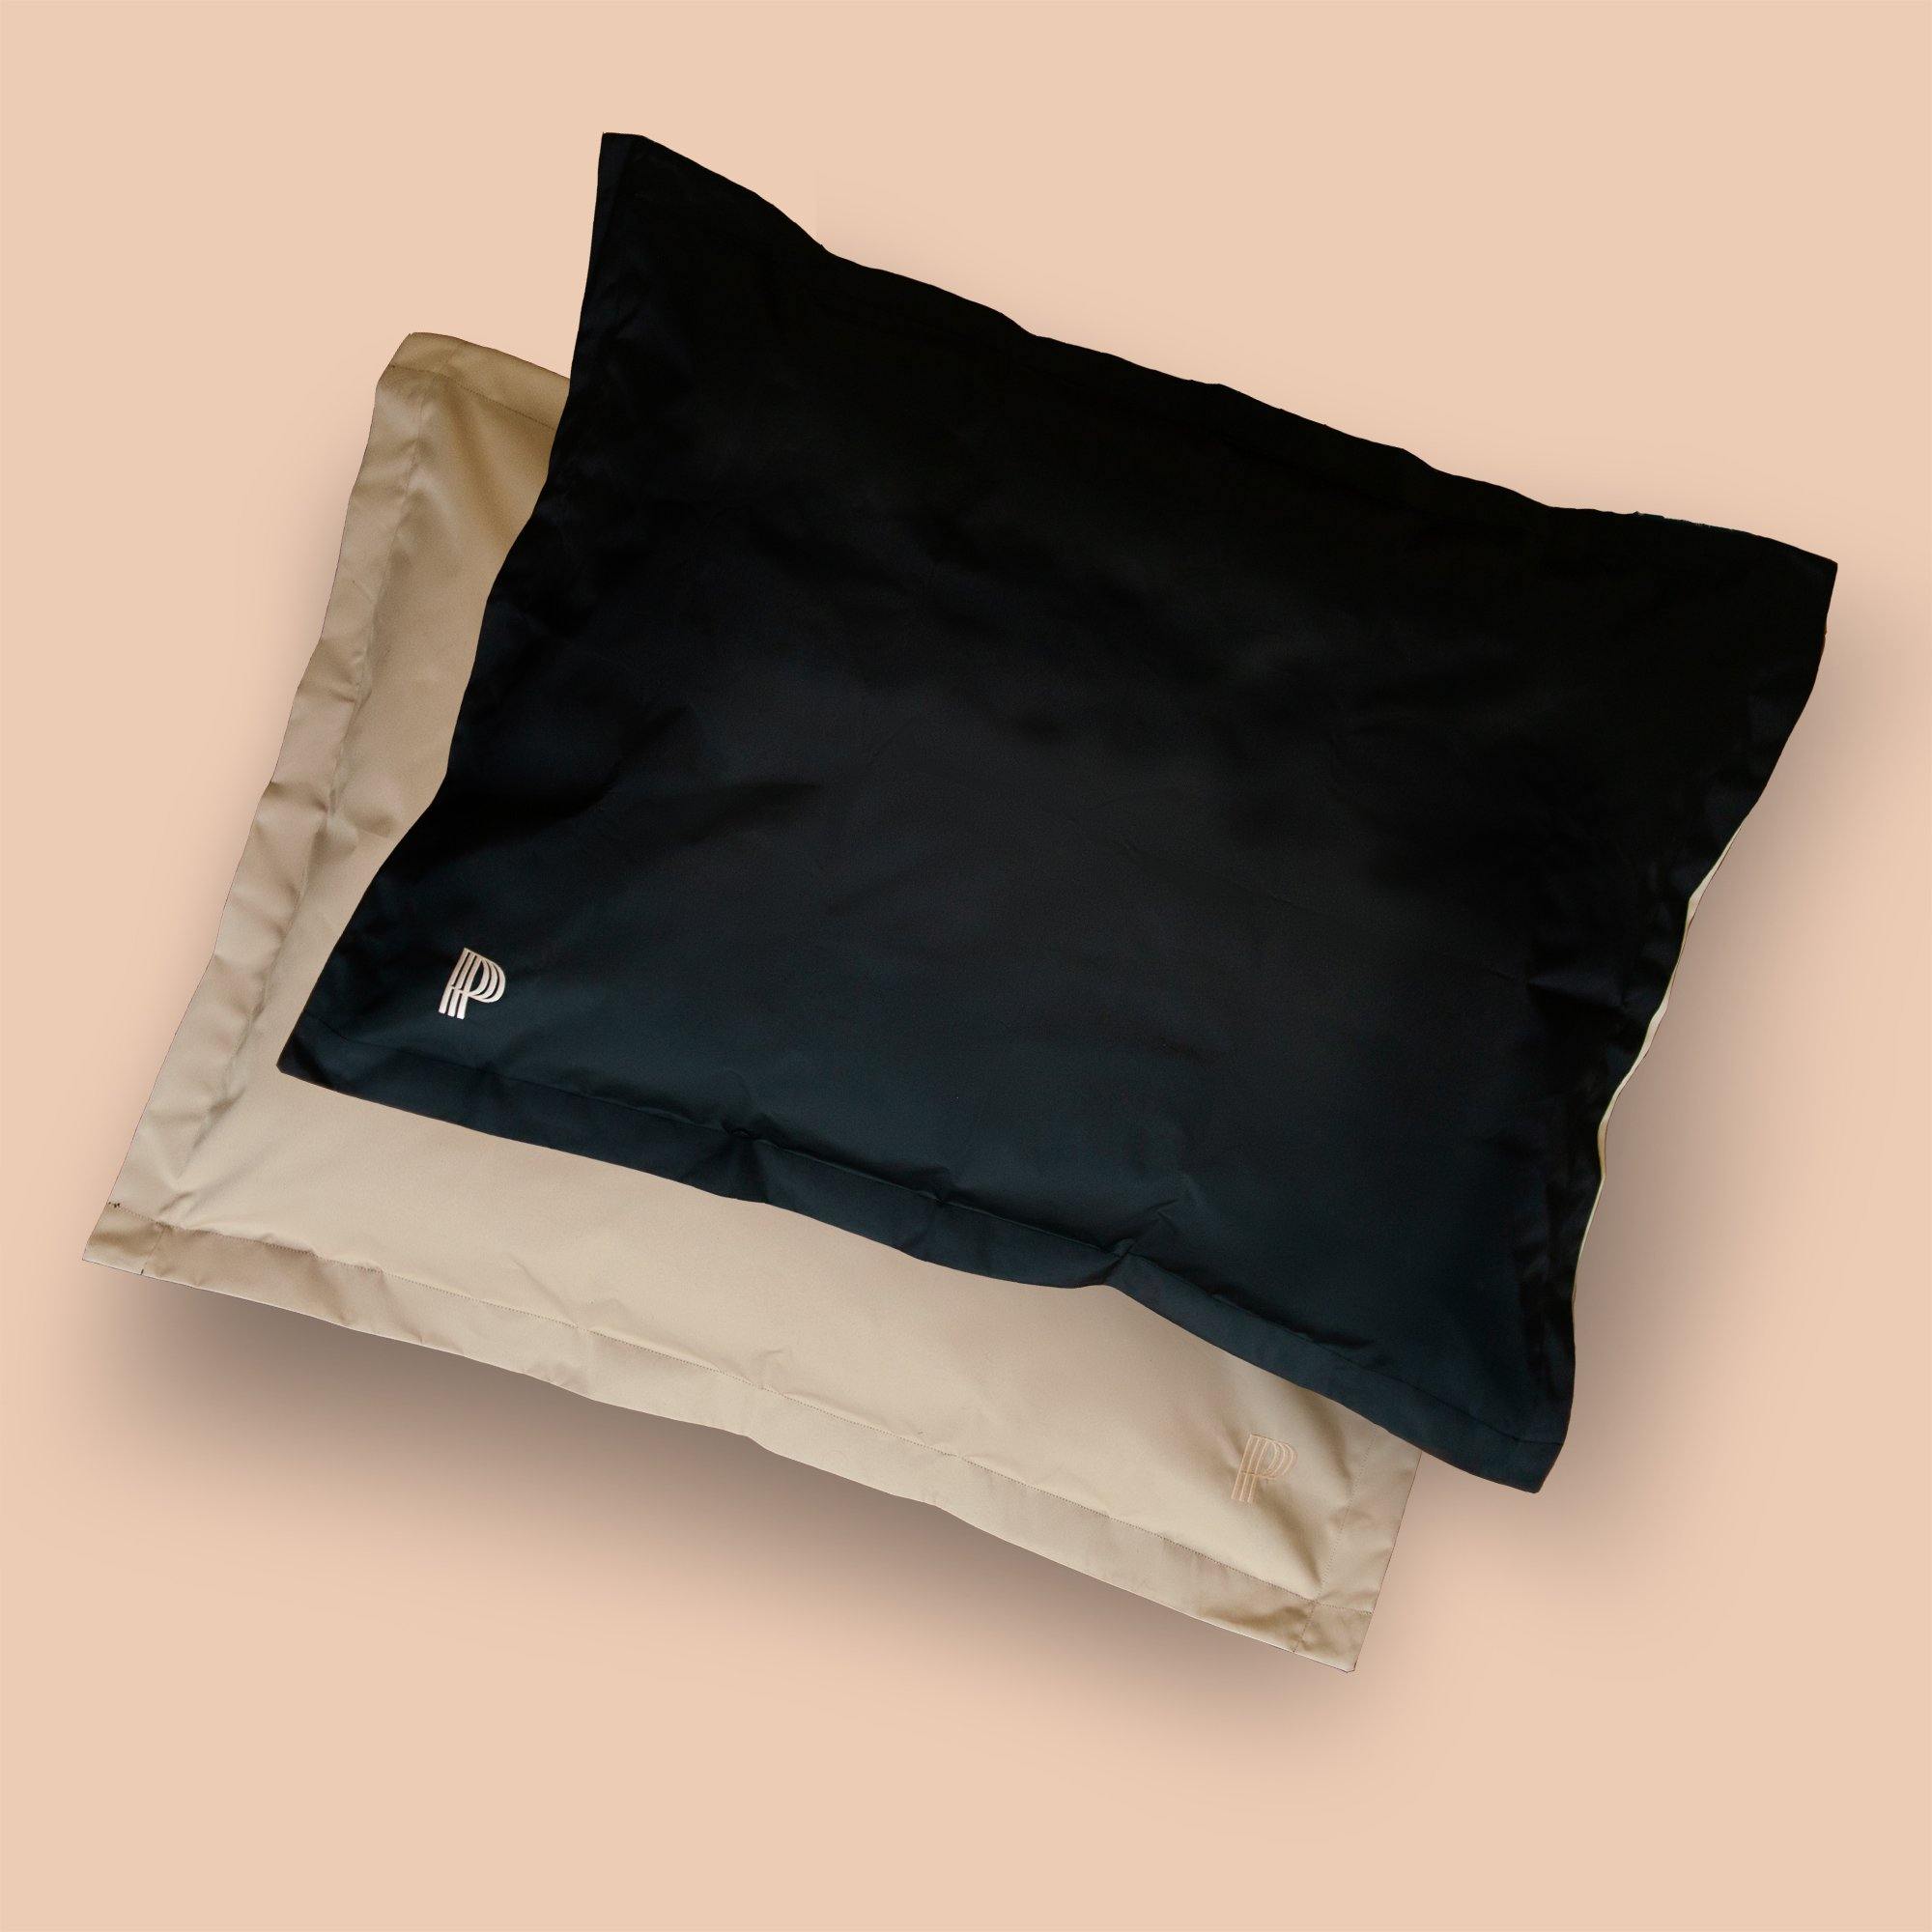 Flat Packs / Covers - Posh Pool Pillow